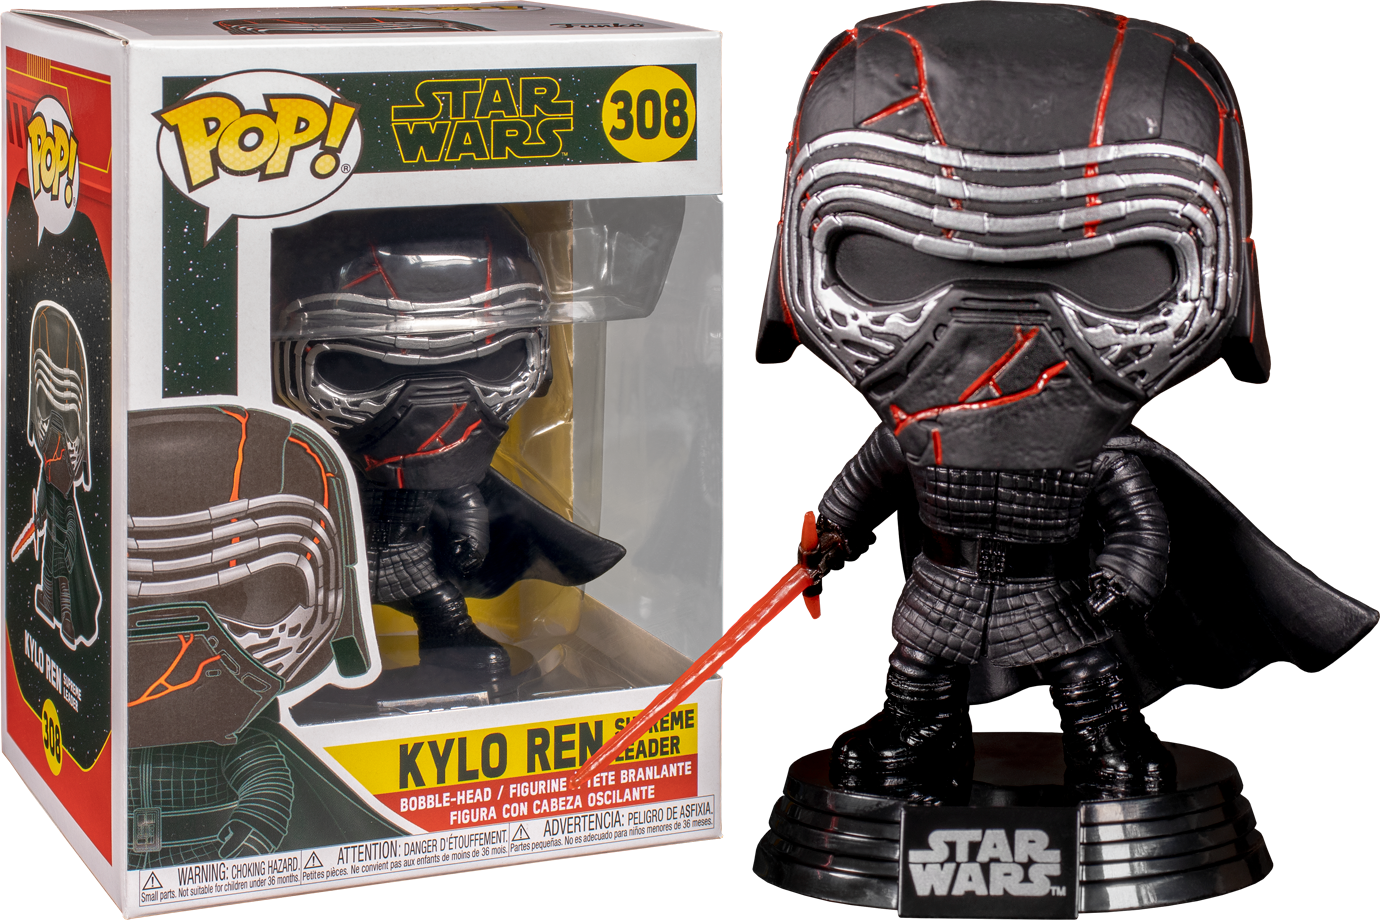 Funko Pop Star Wars: Rise Of Skywalker - Kylo Ren Supreme Leader